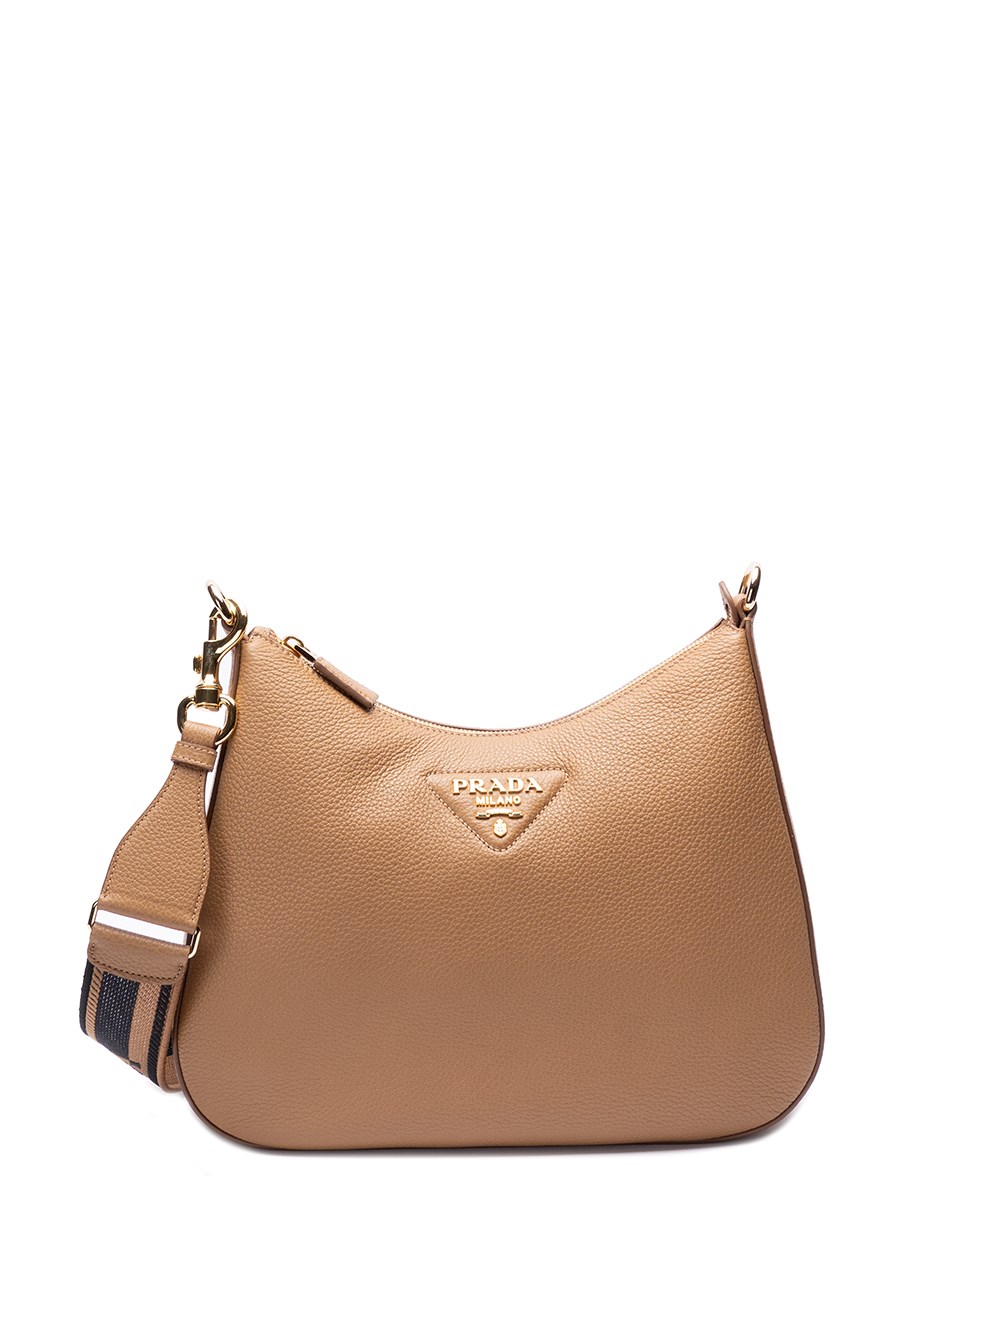 Prada Leather Bag In Brown